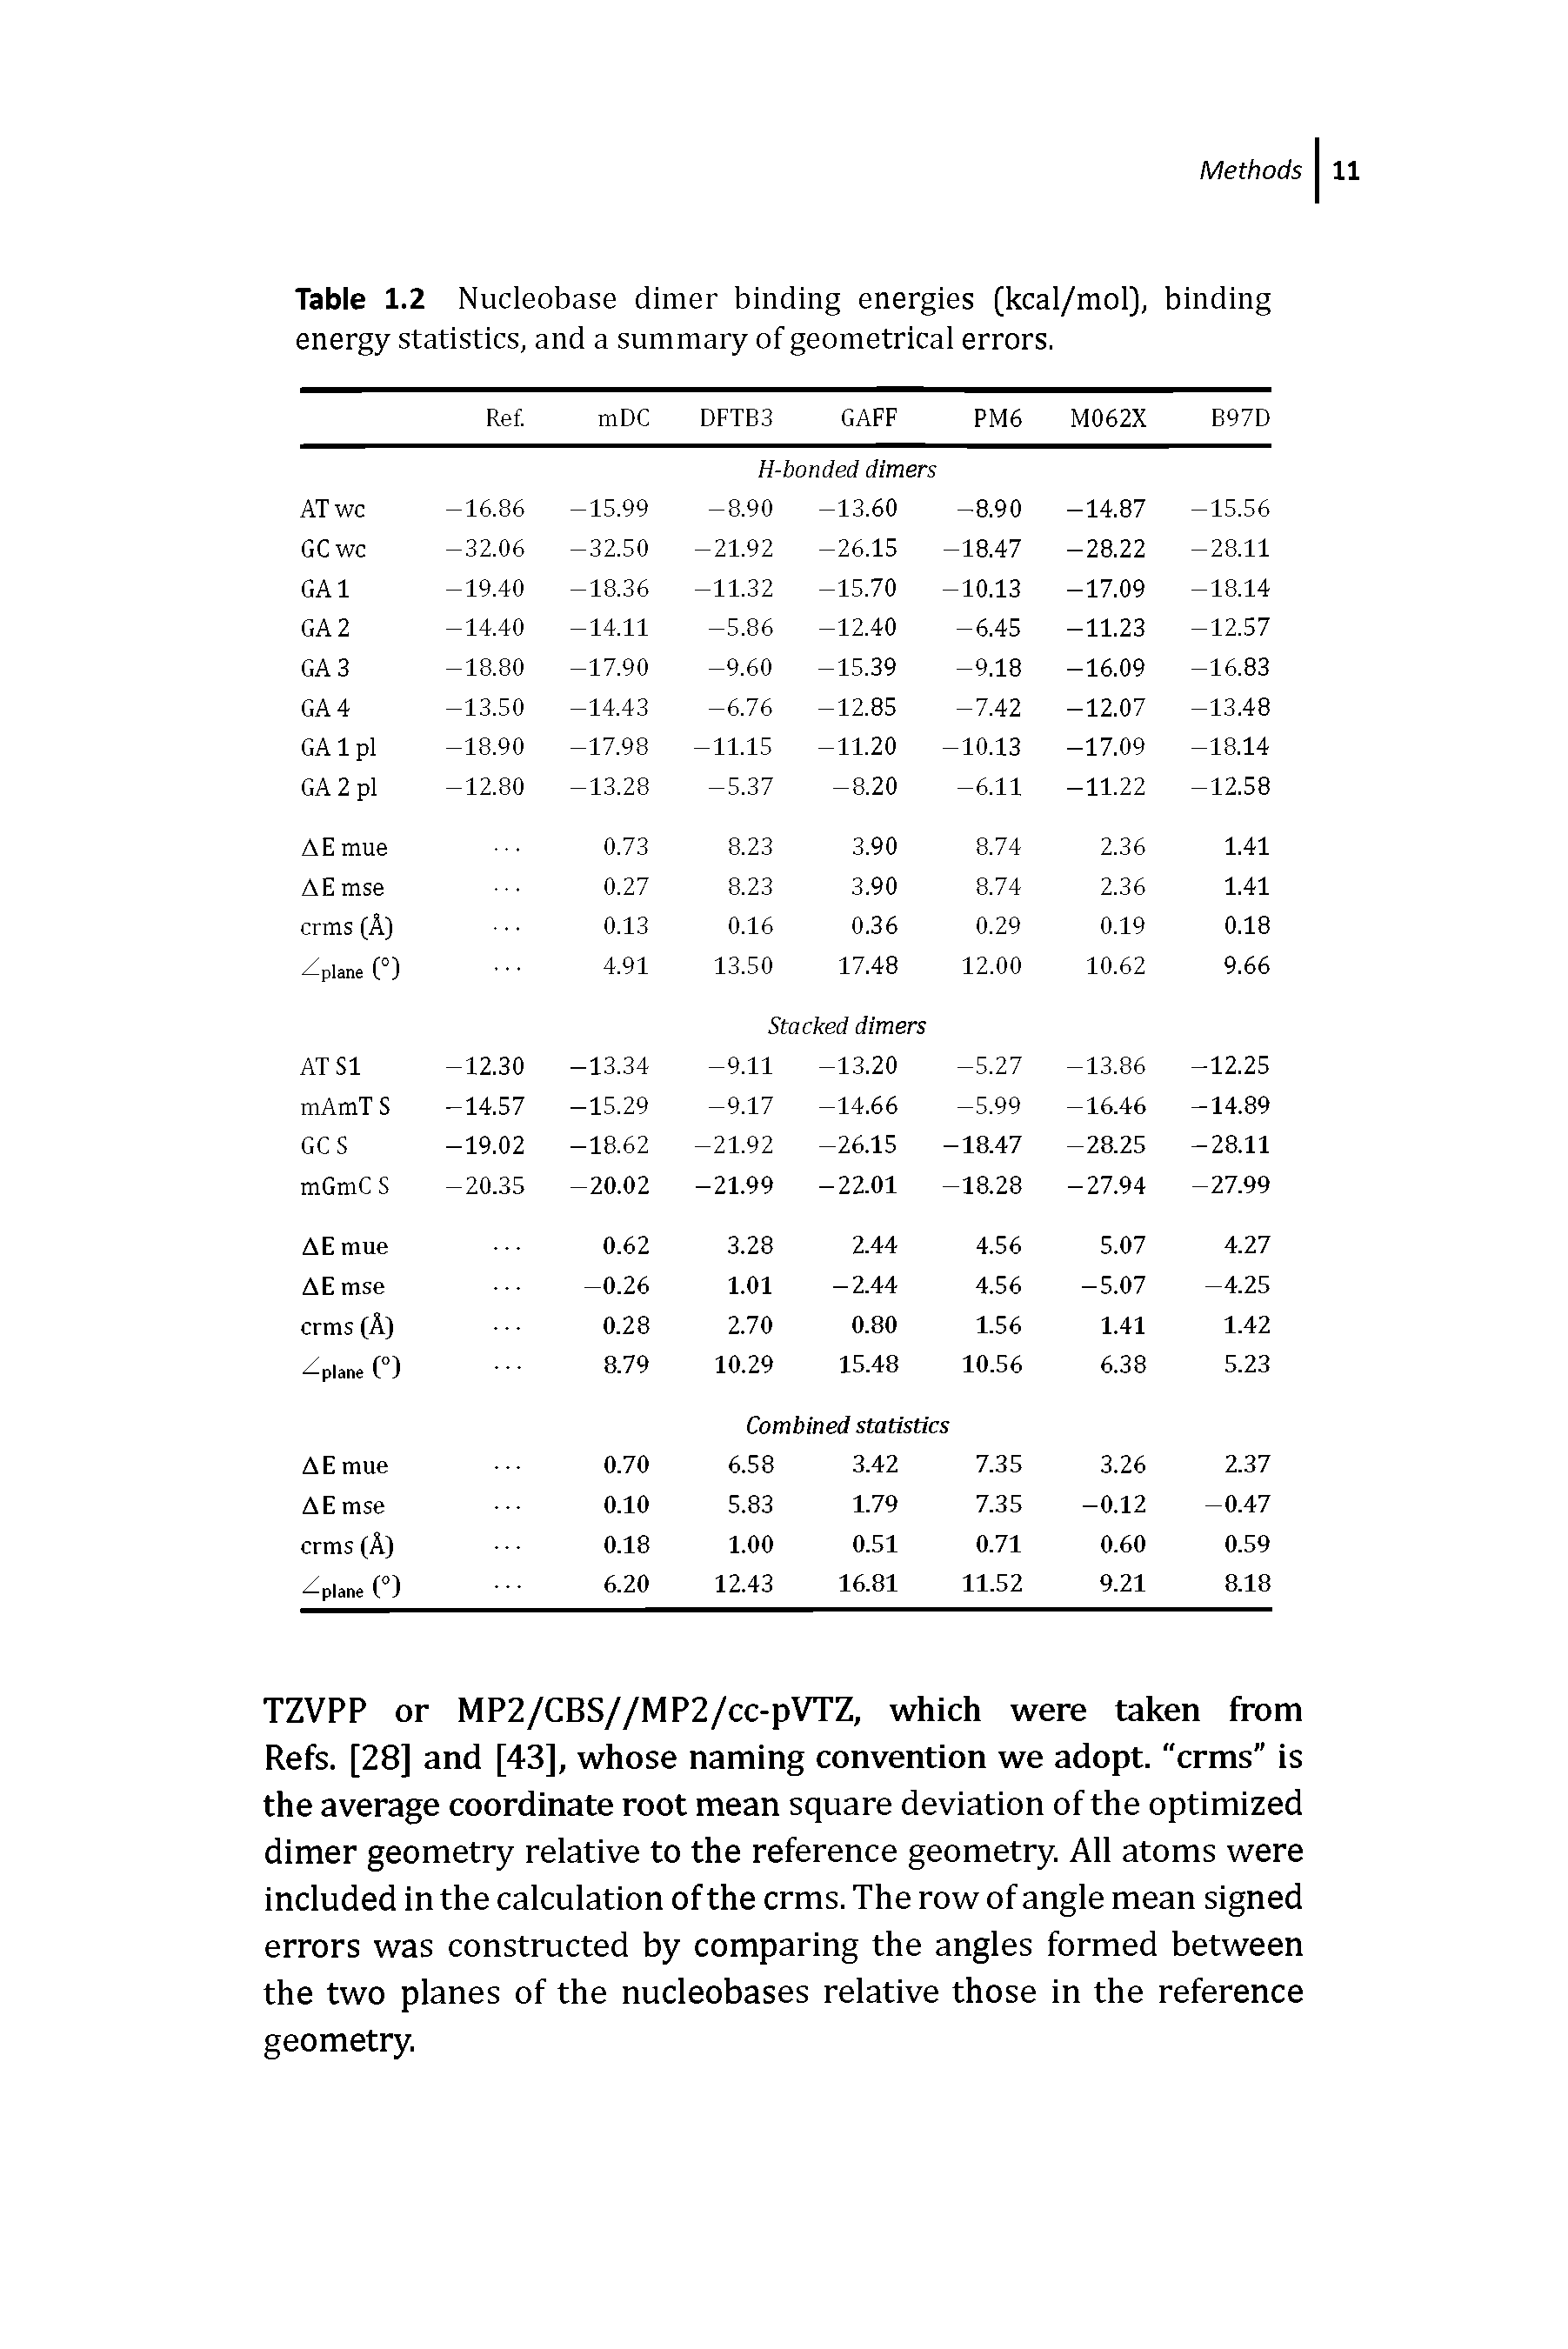 Table 1.2 Nucleobase dimer binding energies [kcal/mol], binding energy statistics, and a summary of geometricai errors.